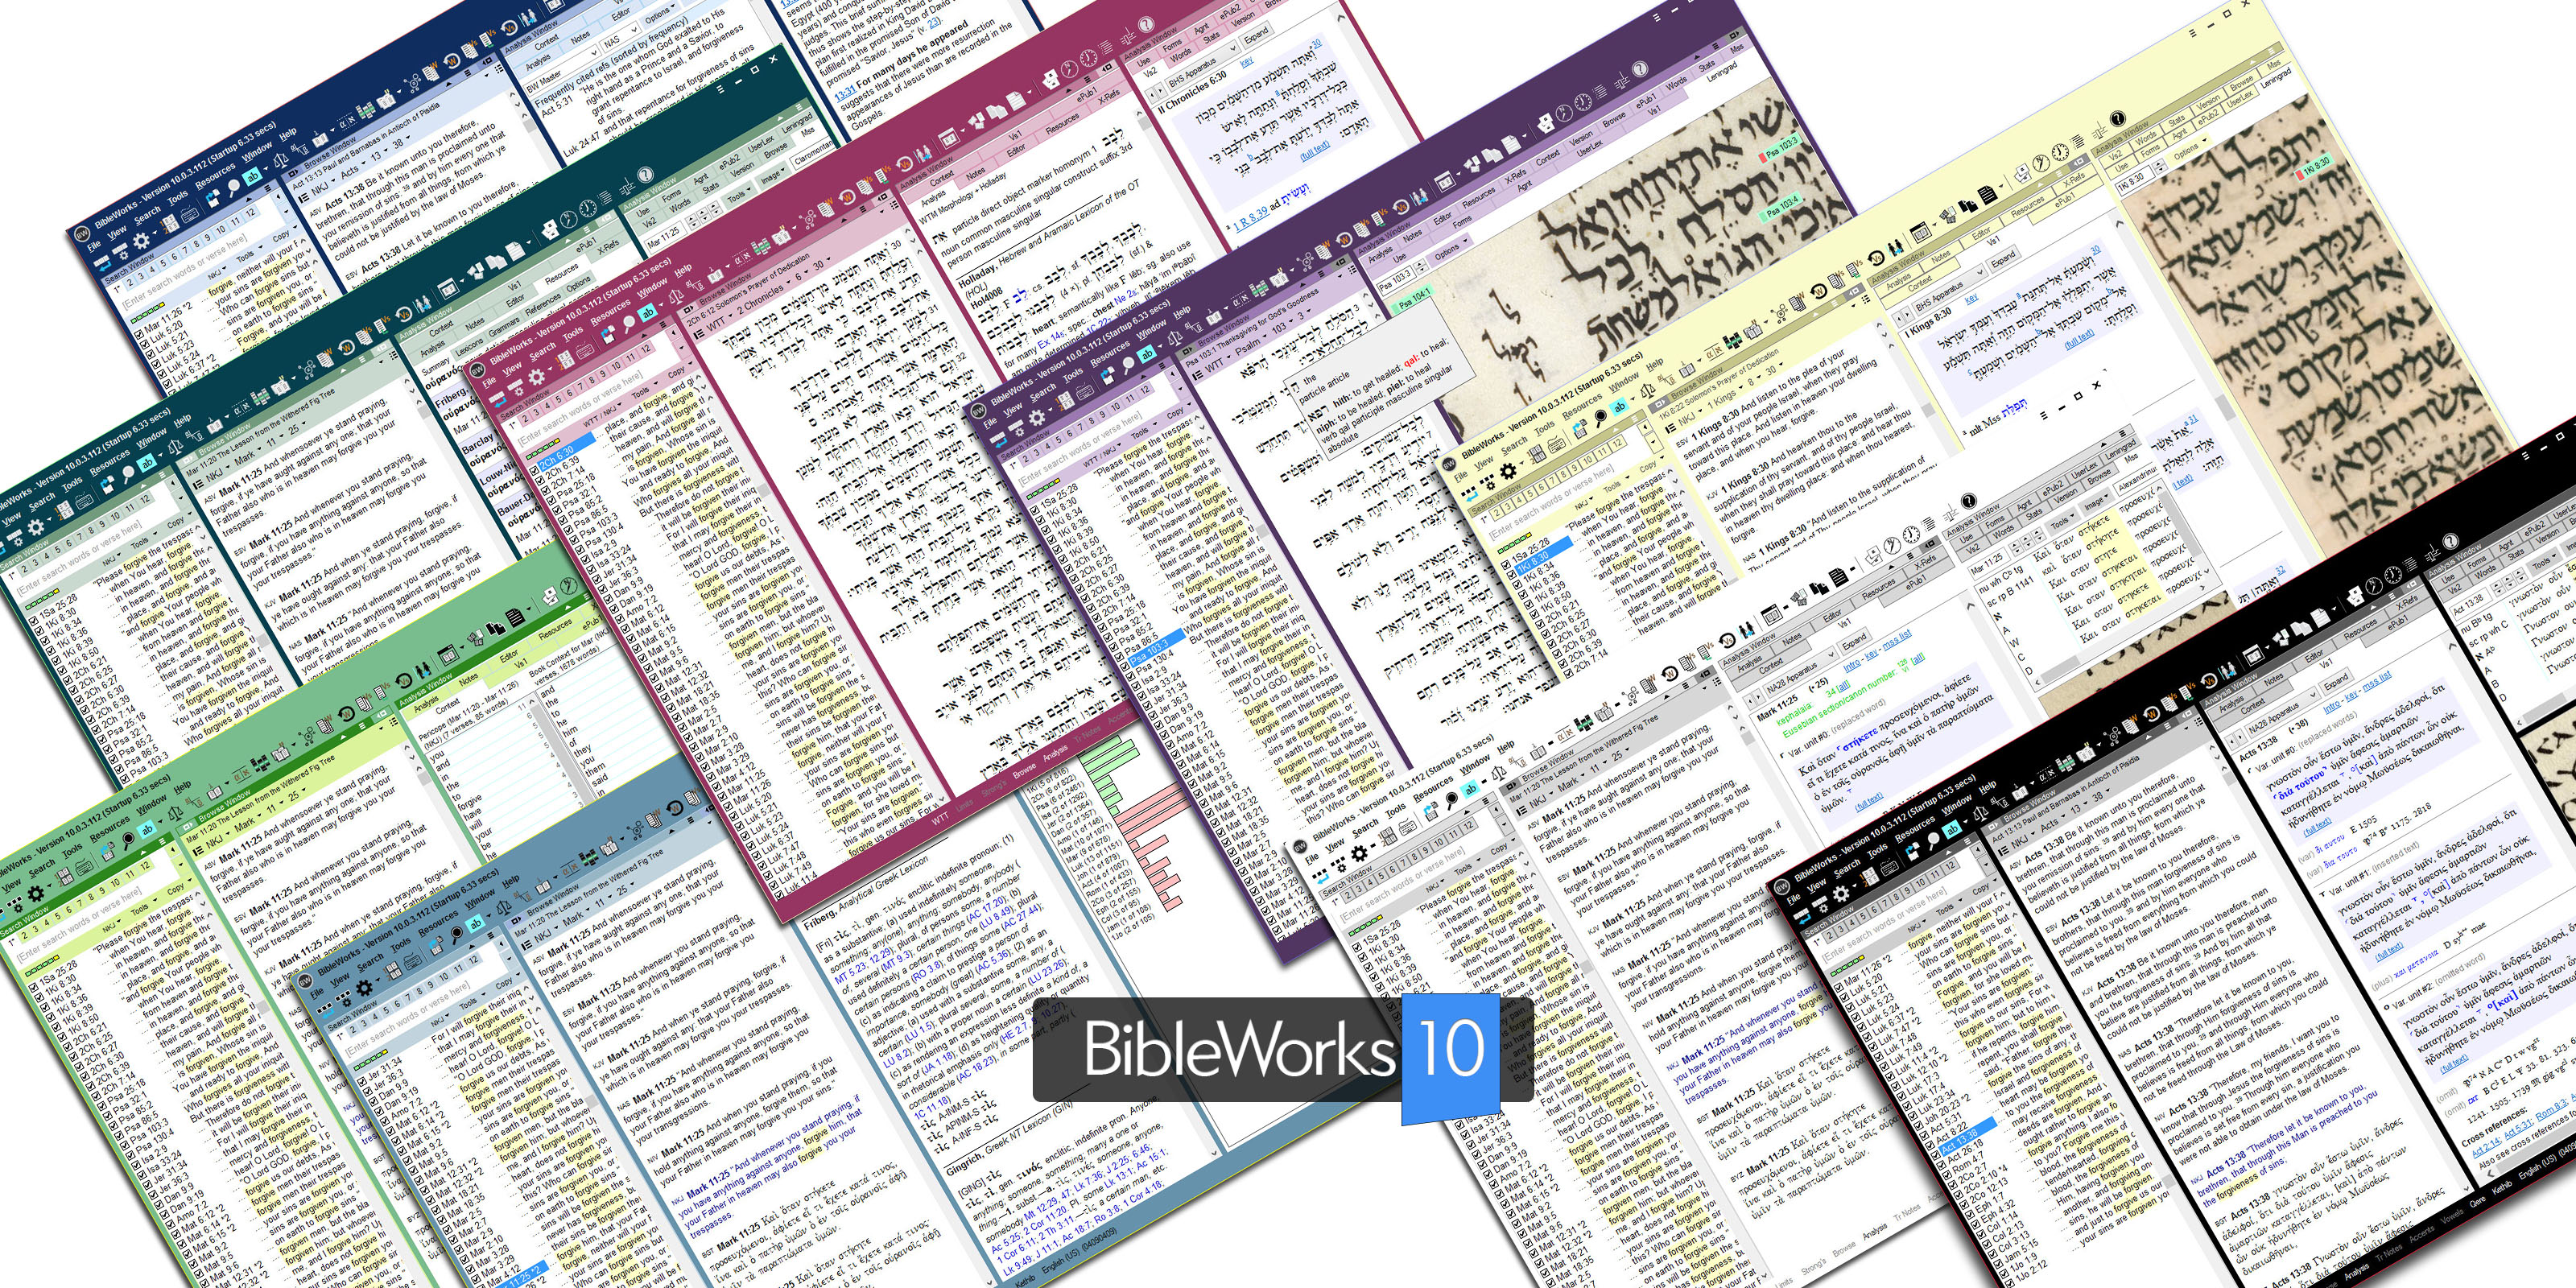 bibleworks 4 install on windows 10